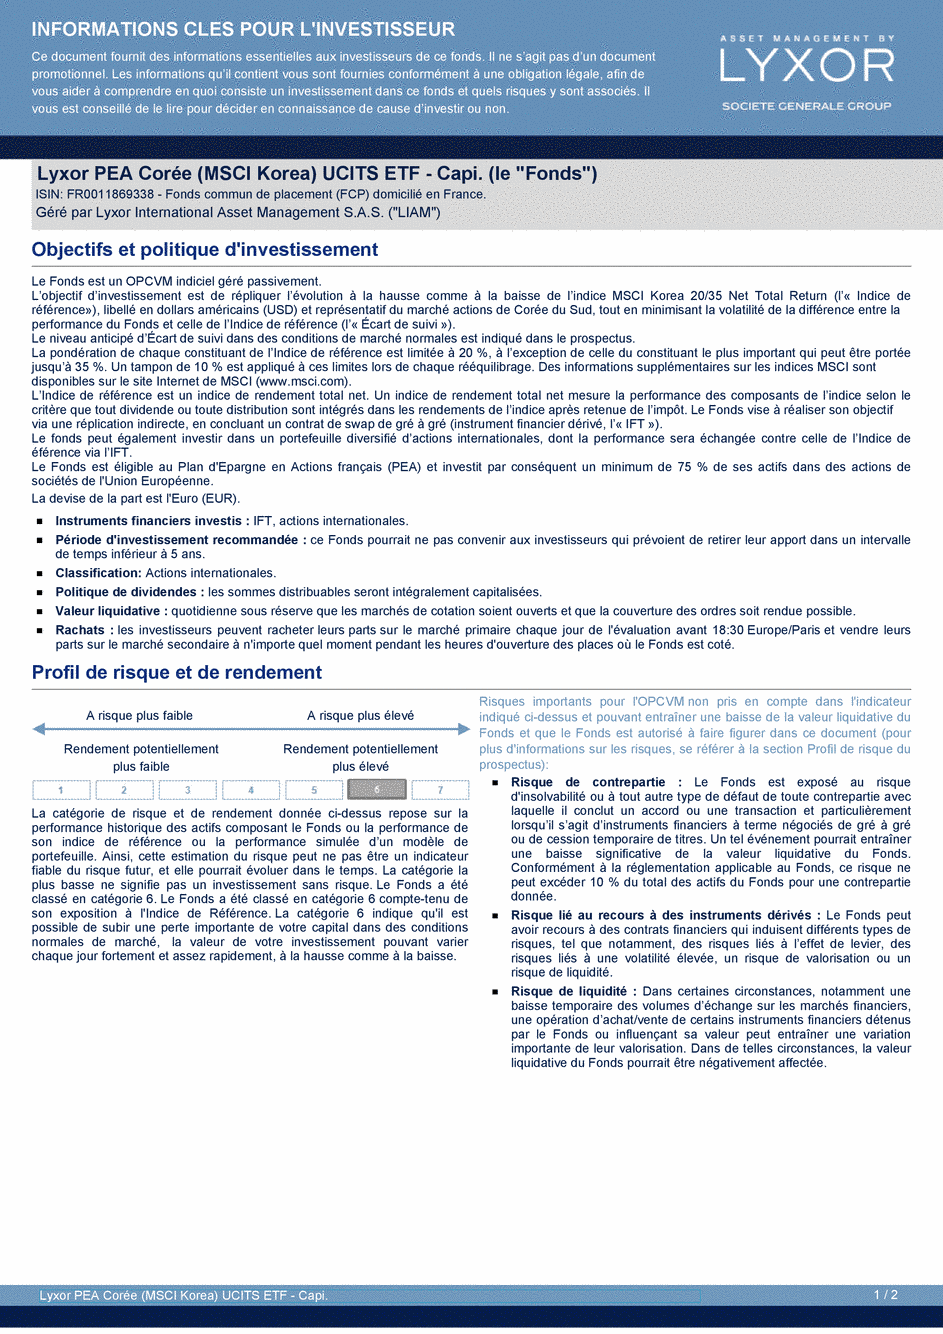 DICI Lyxor PEA Corée (MSCI Korea) UCITS ETF - Capi. - 19/02/2021 - French